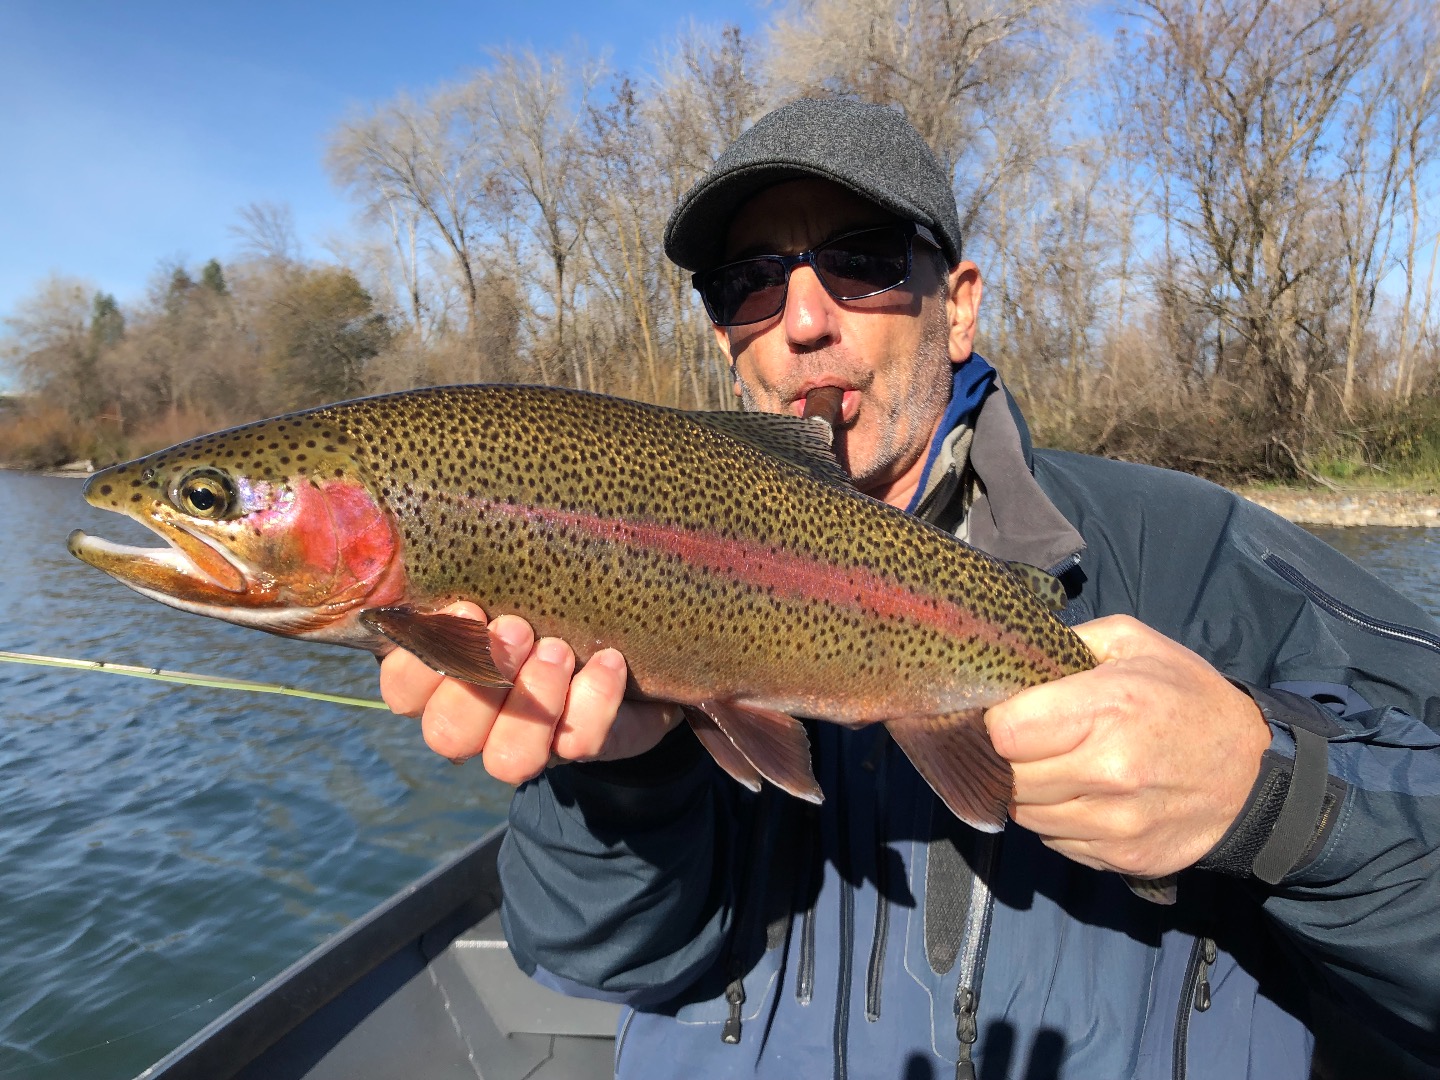 Sac River wild rainbow fishing!